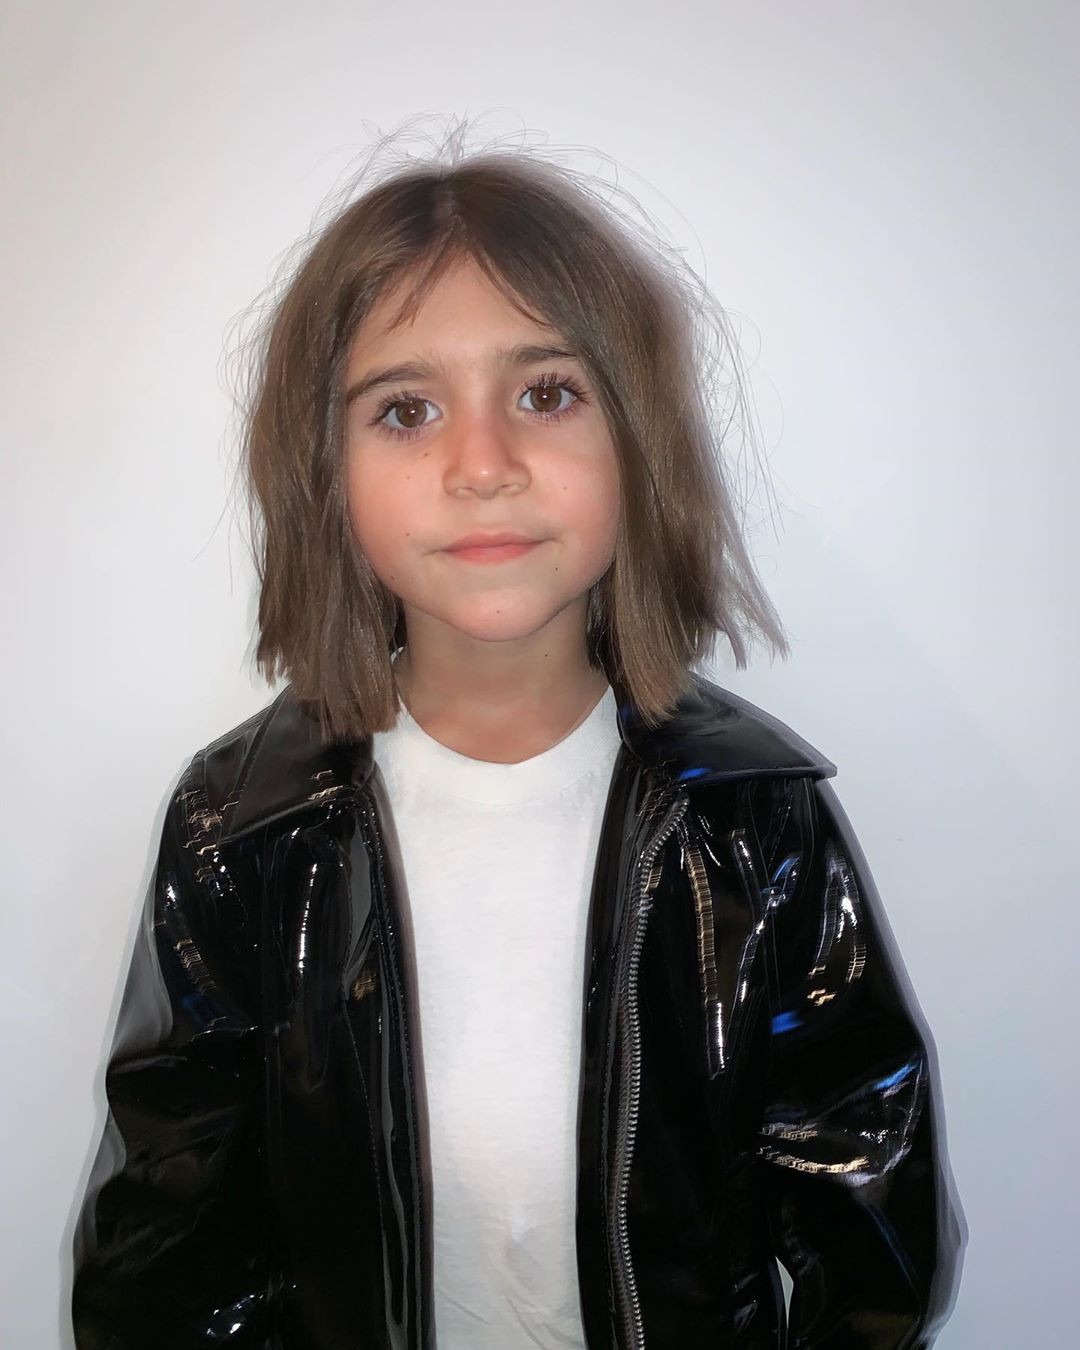 Kourtney Kardashians Daughter Penelope Disick Gets Her First Ever Haircut 